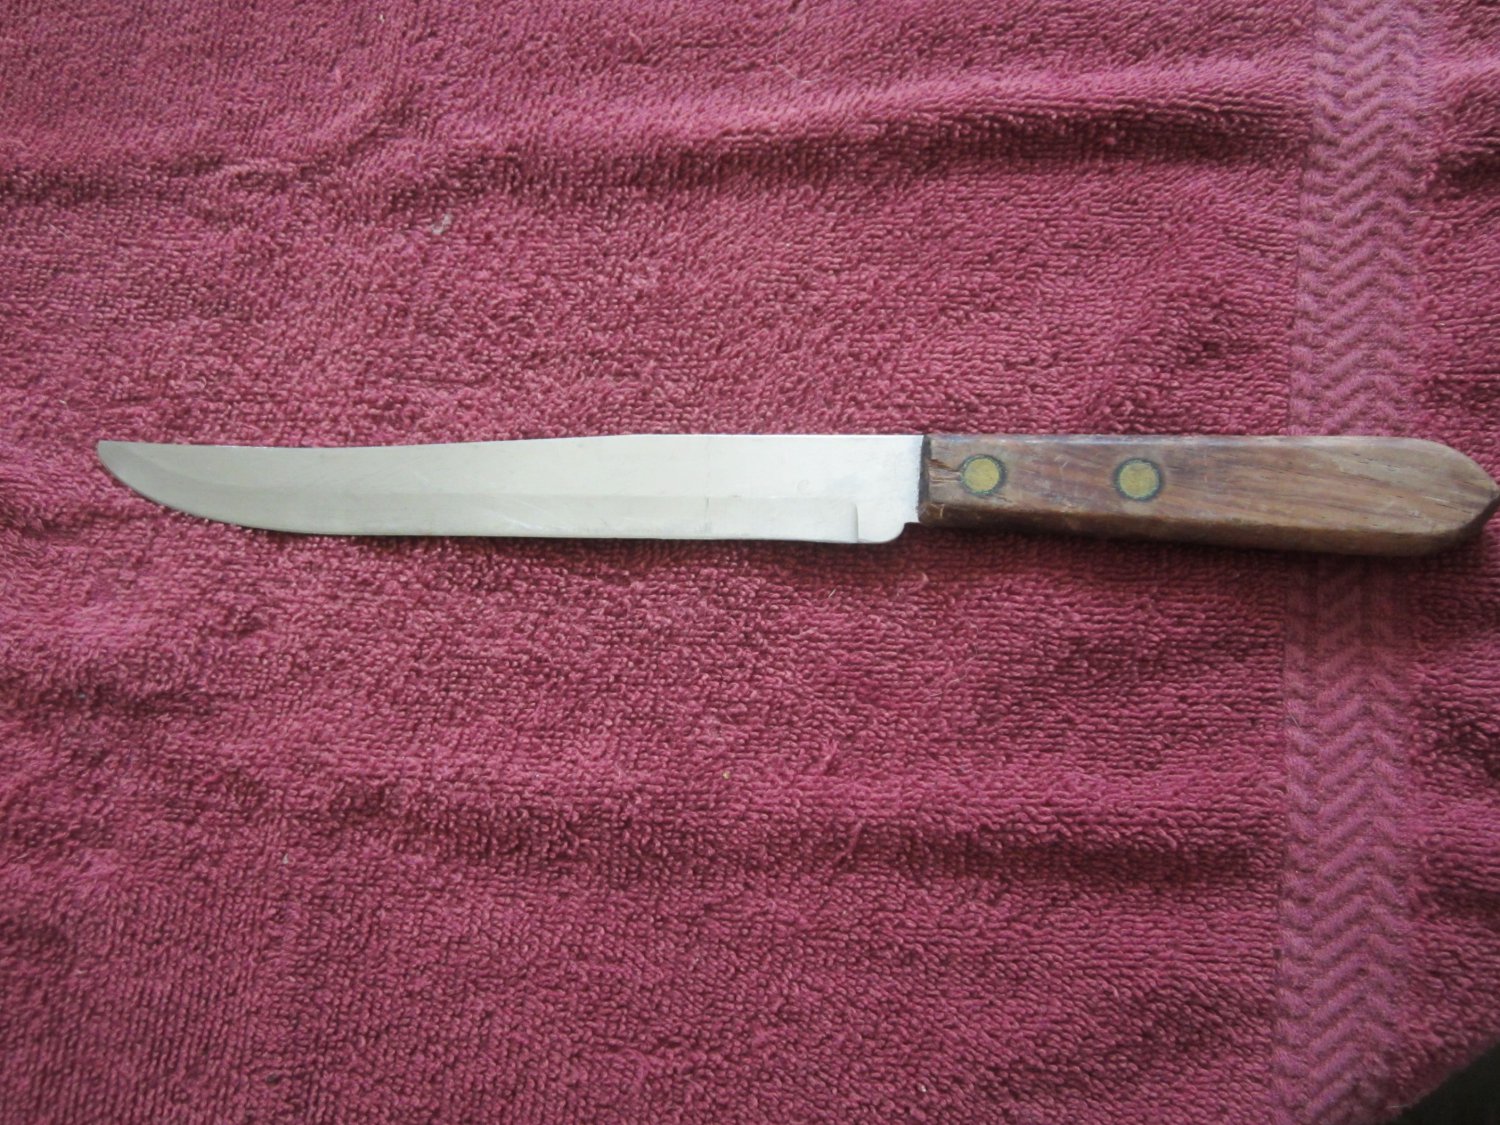 Forgecraft Knife